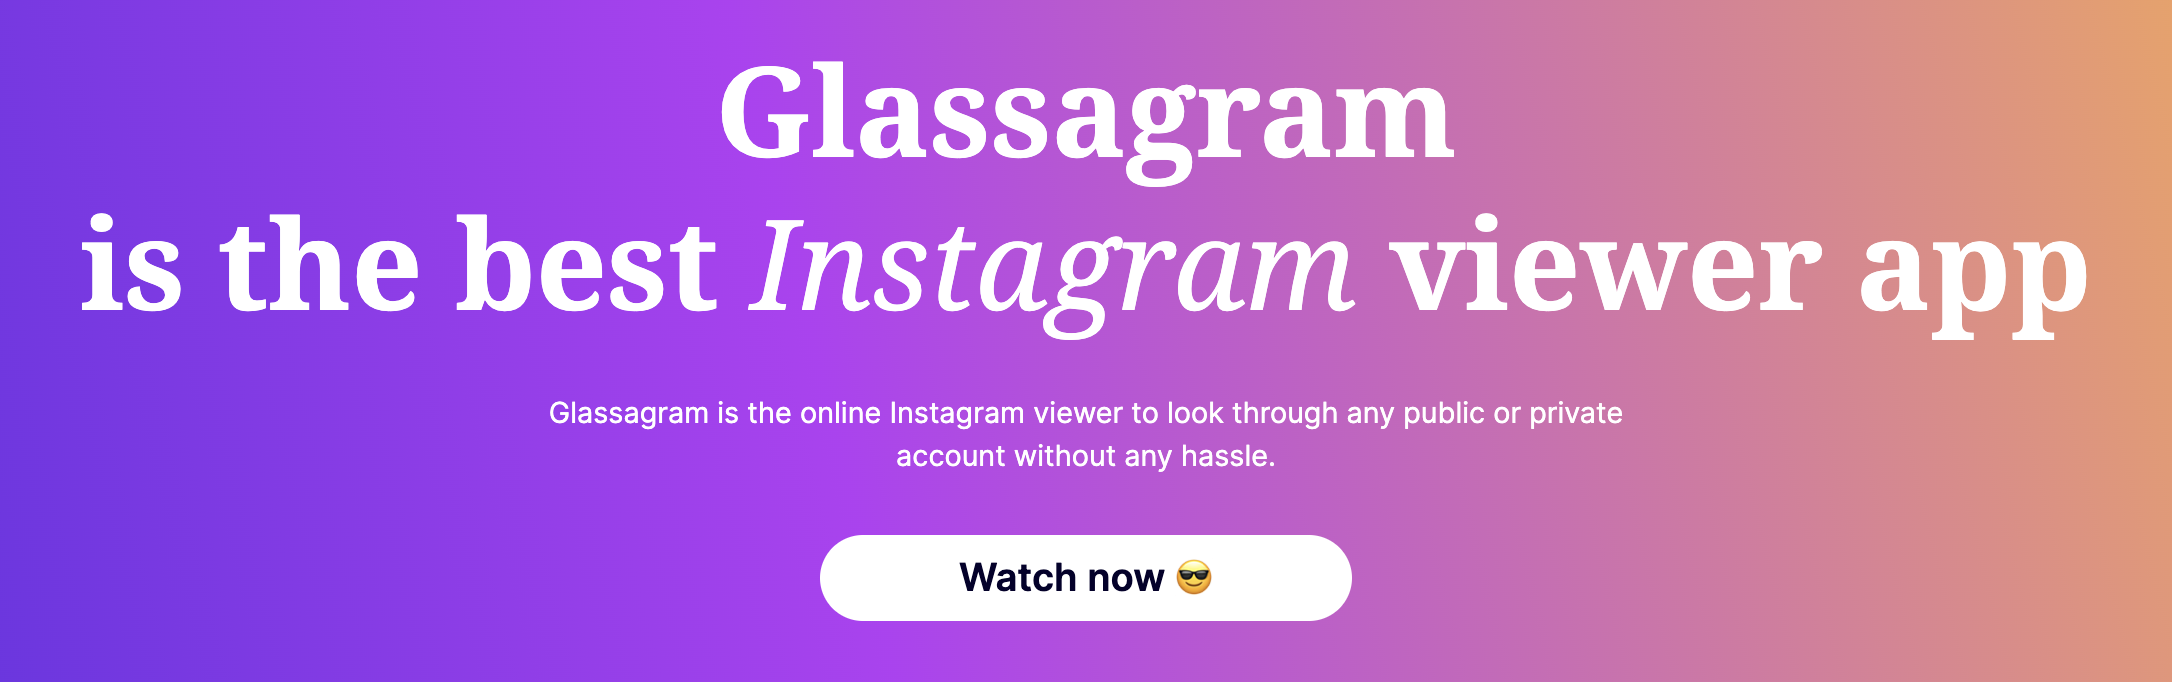 Glassagram is the best Instagram viewer app